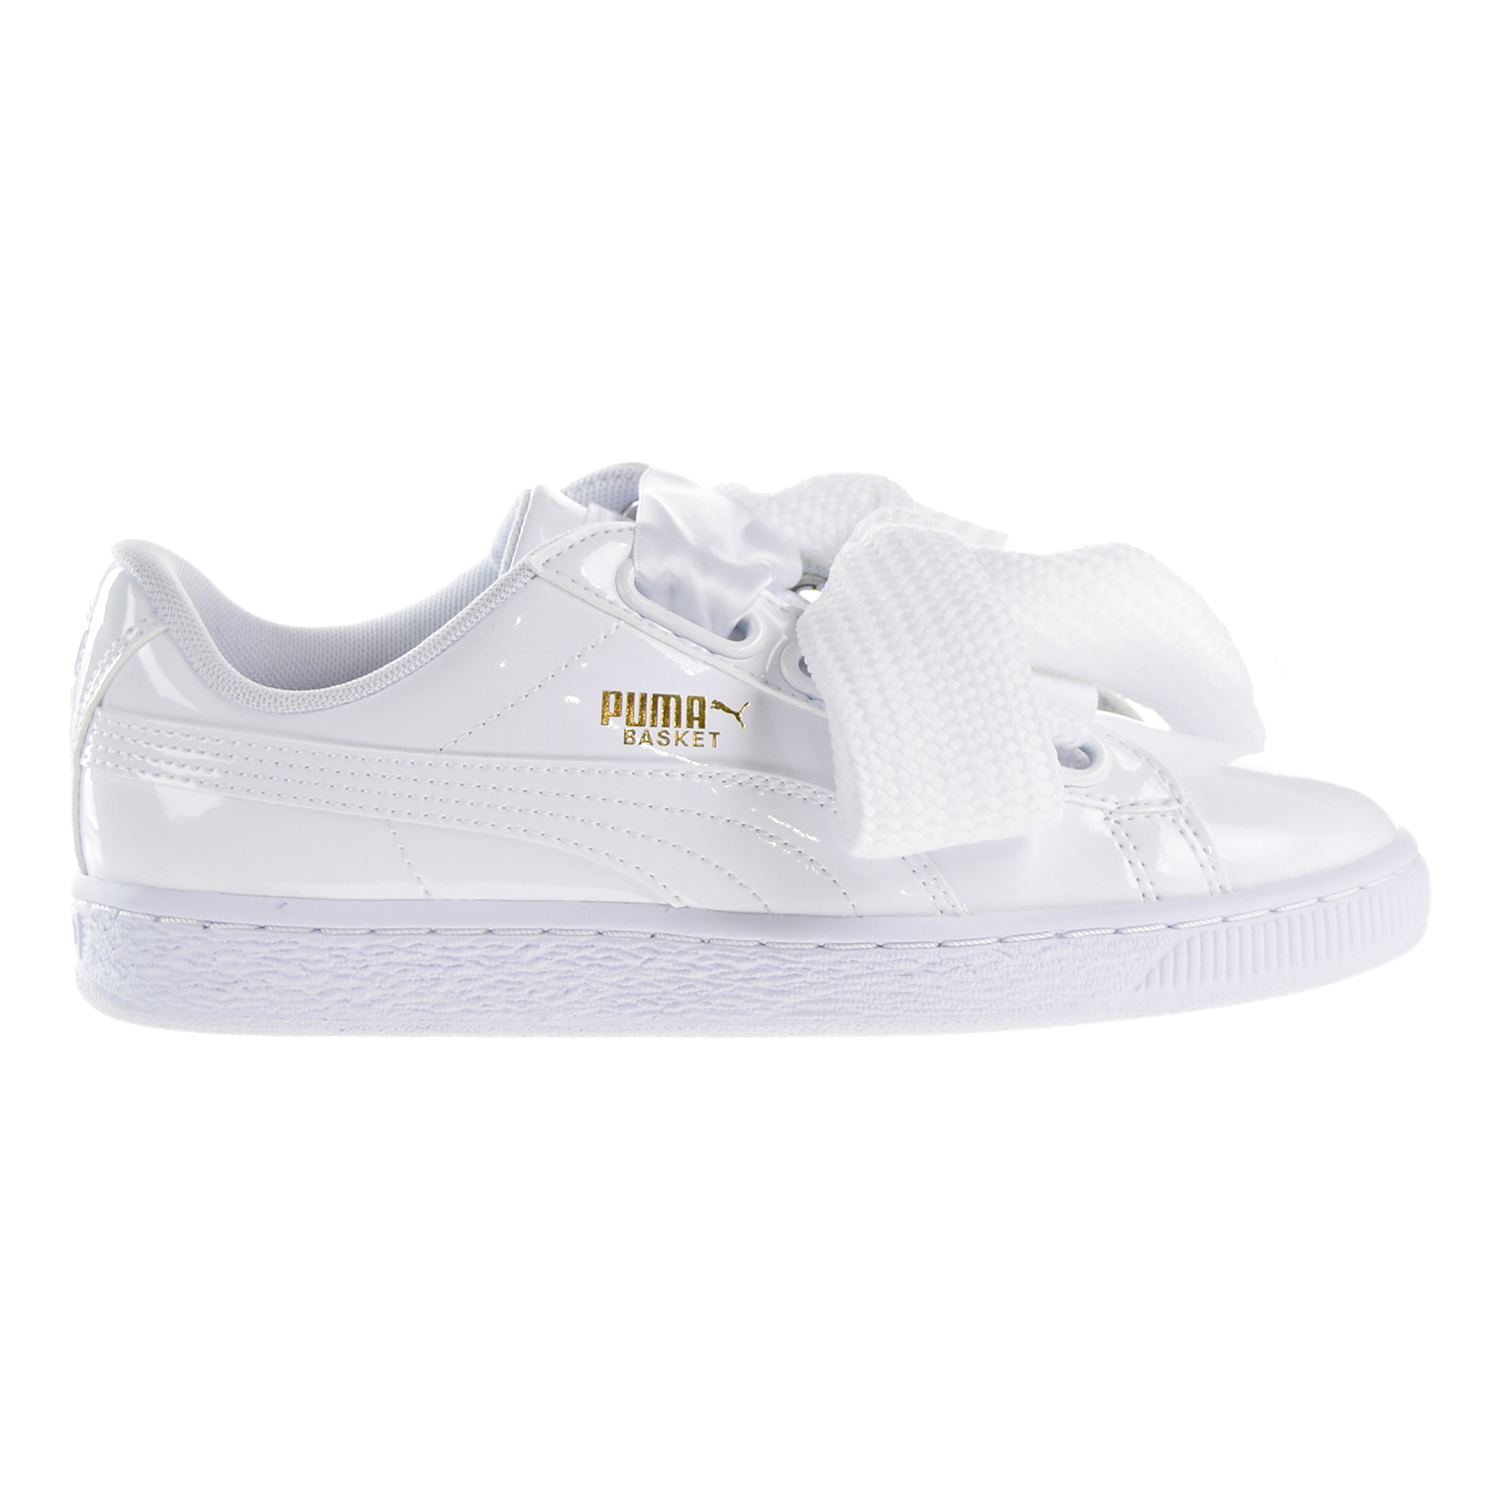 puma basket white shoes